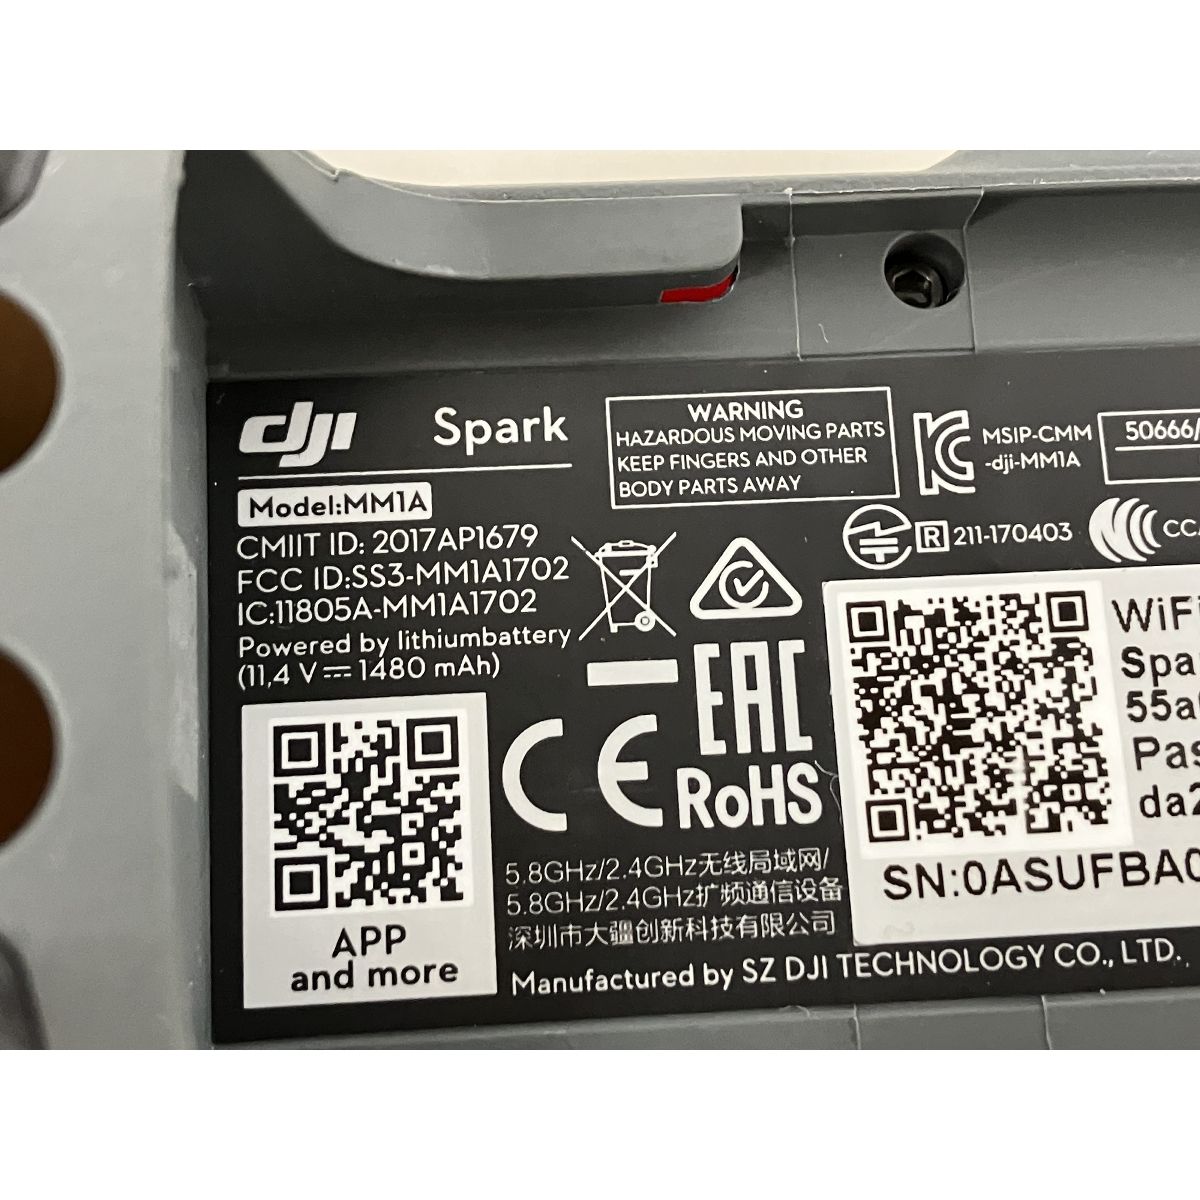 DJI SPARK MM1A ドローン GL100A コントローラー バッテリー付き 空撮 ジャンク K8778082 - メルカリ